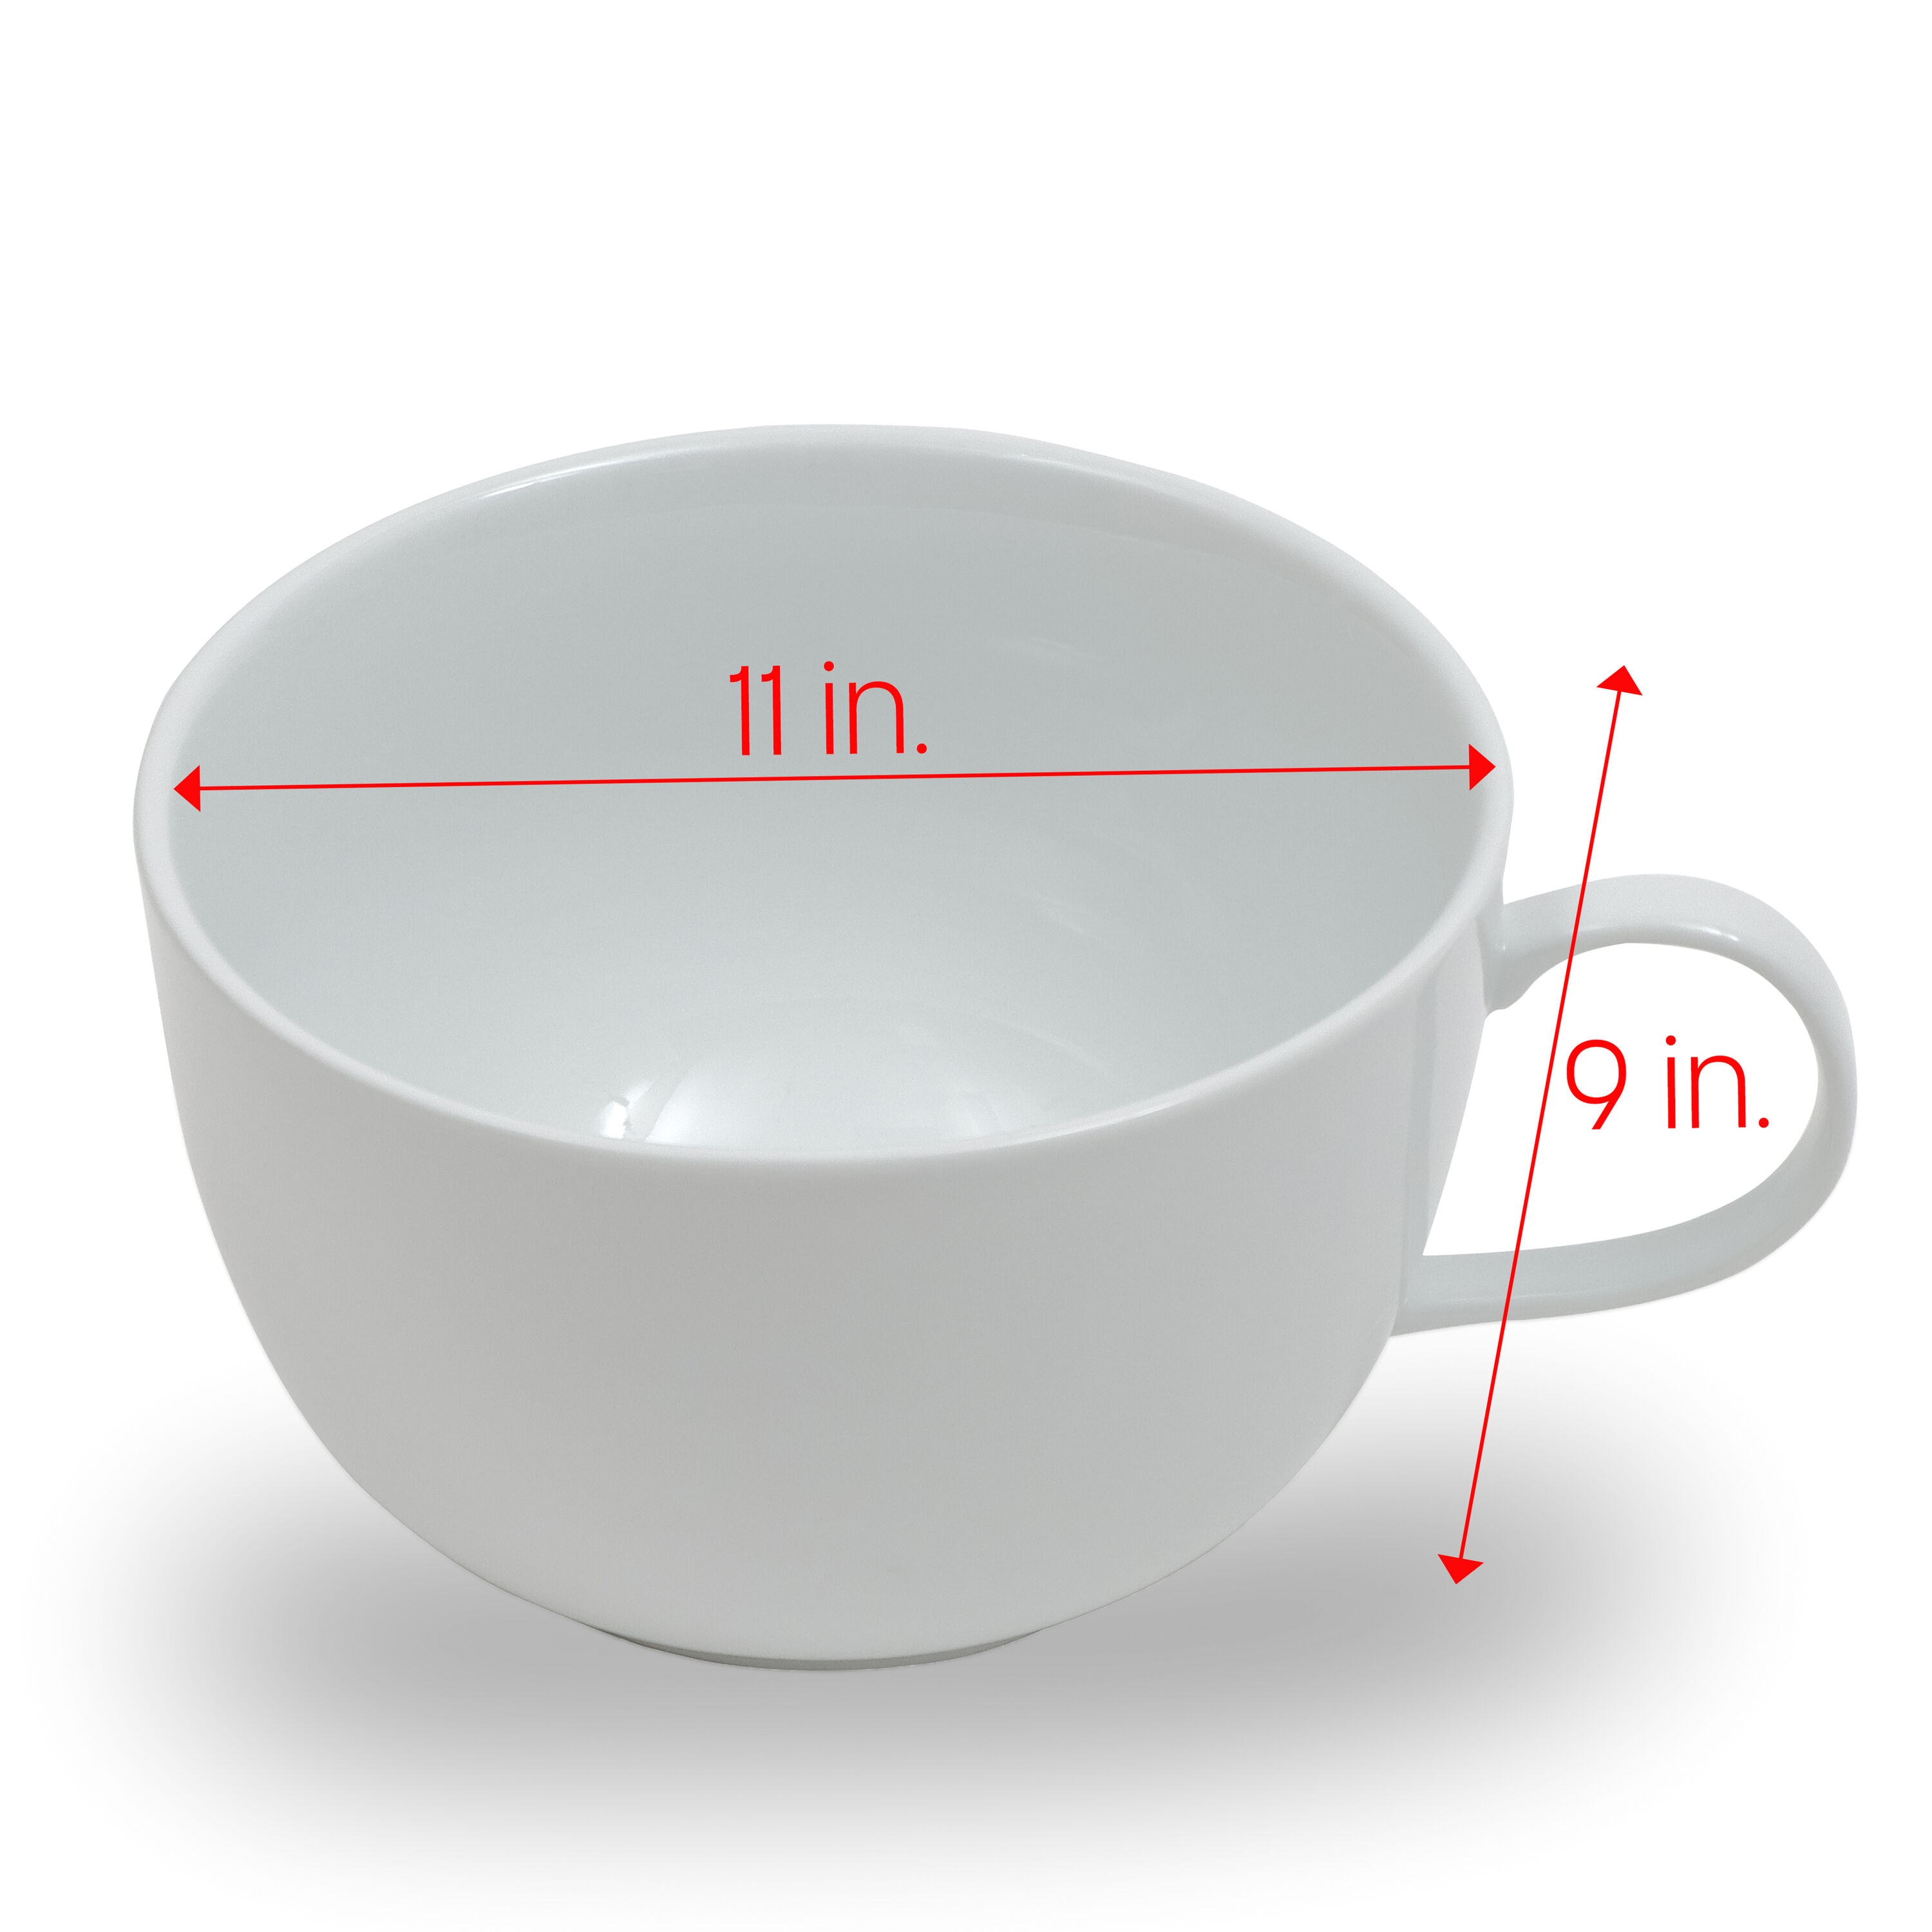 Therapy is Like Coffee Two-toned Coffee Cup SM Coffee Mug 